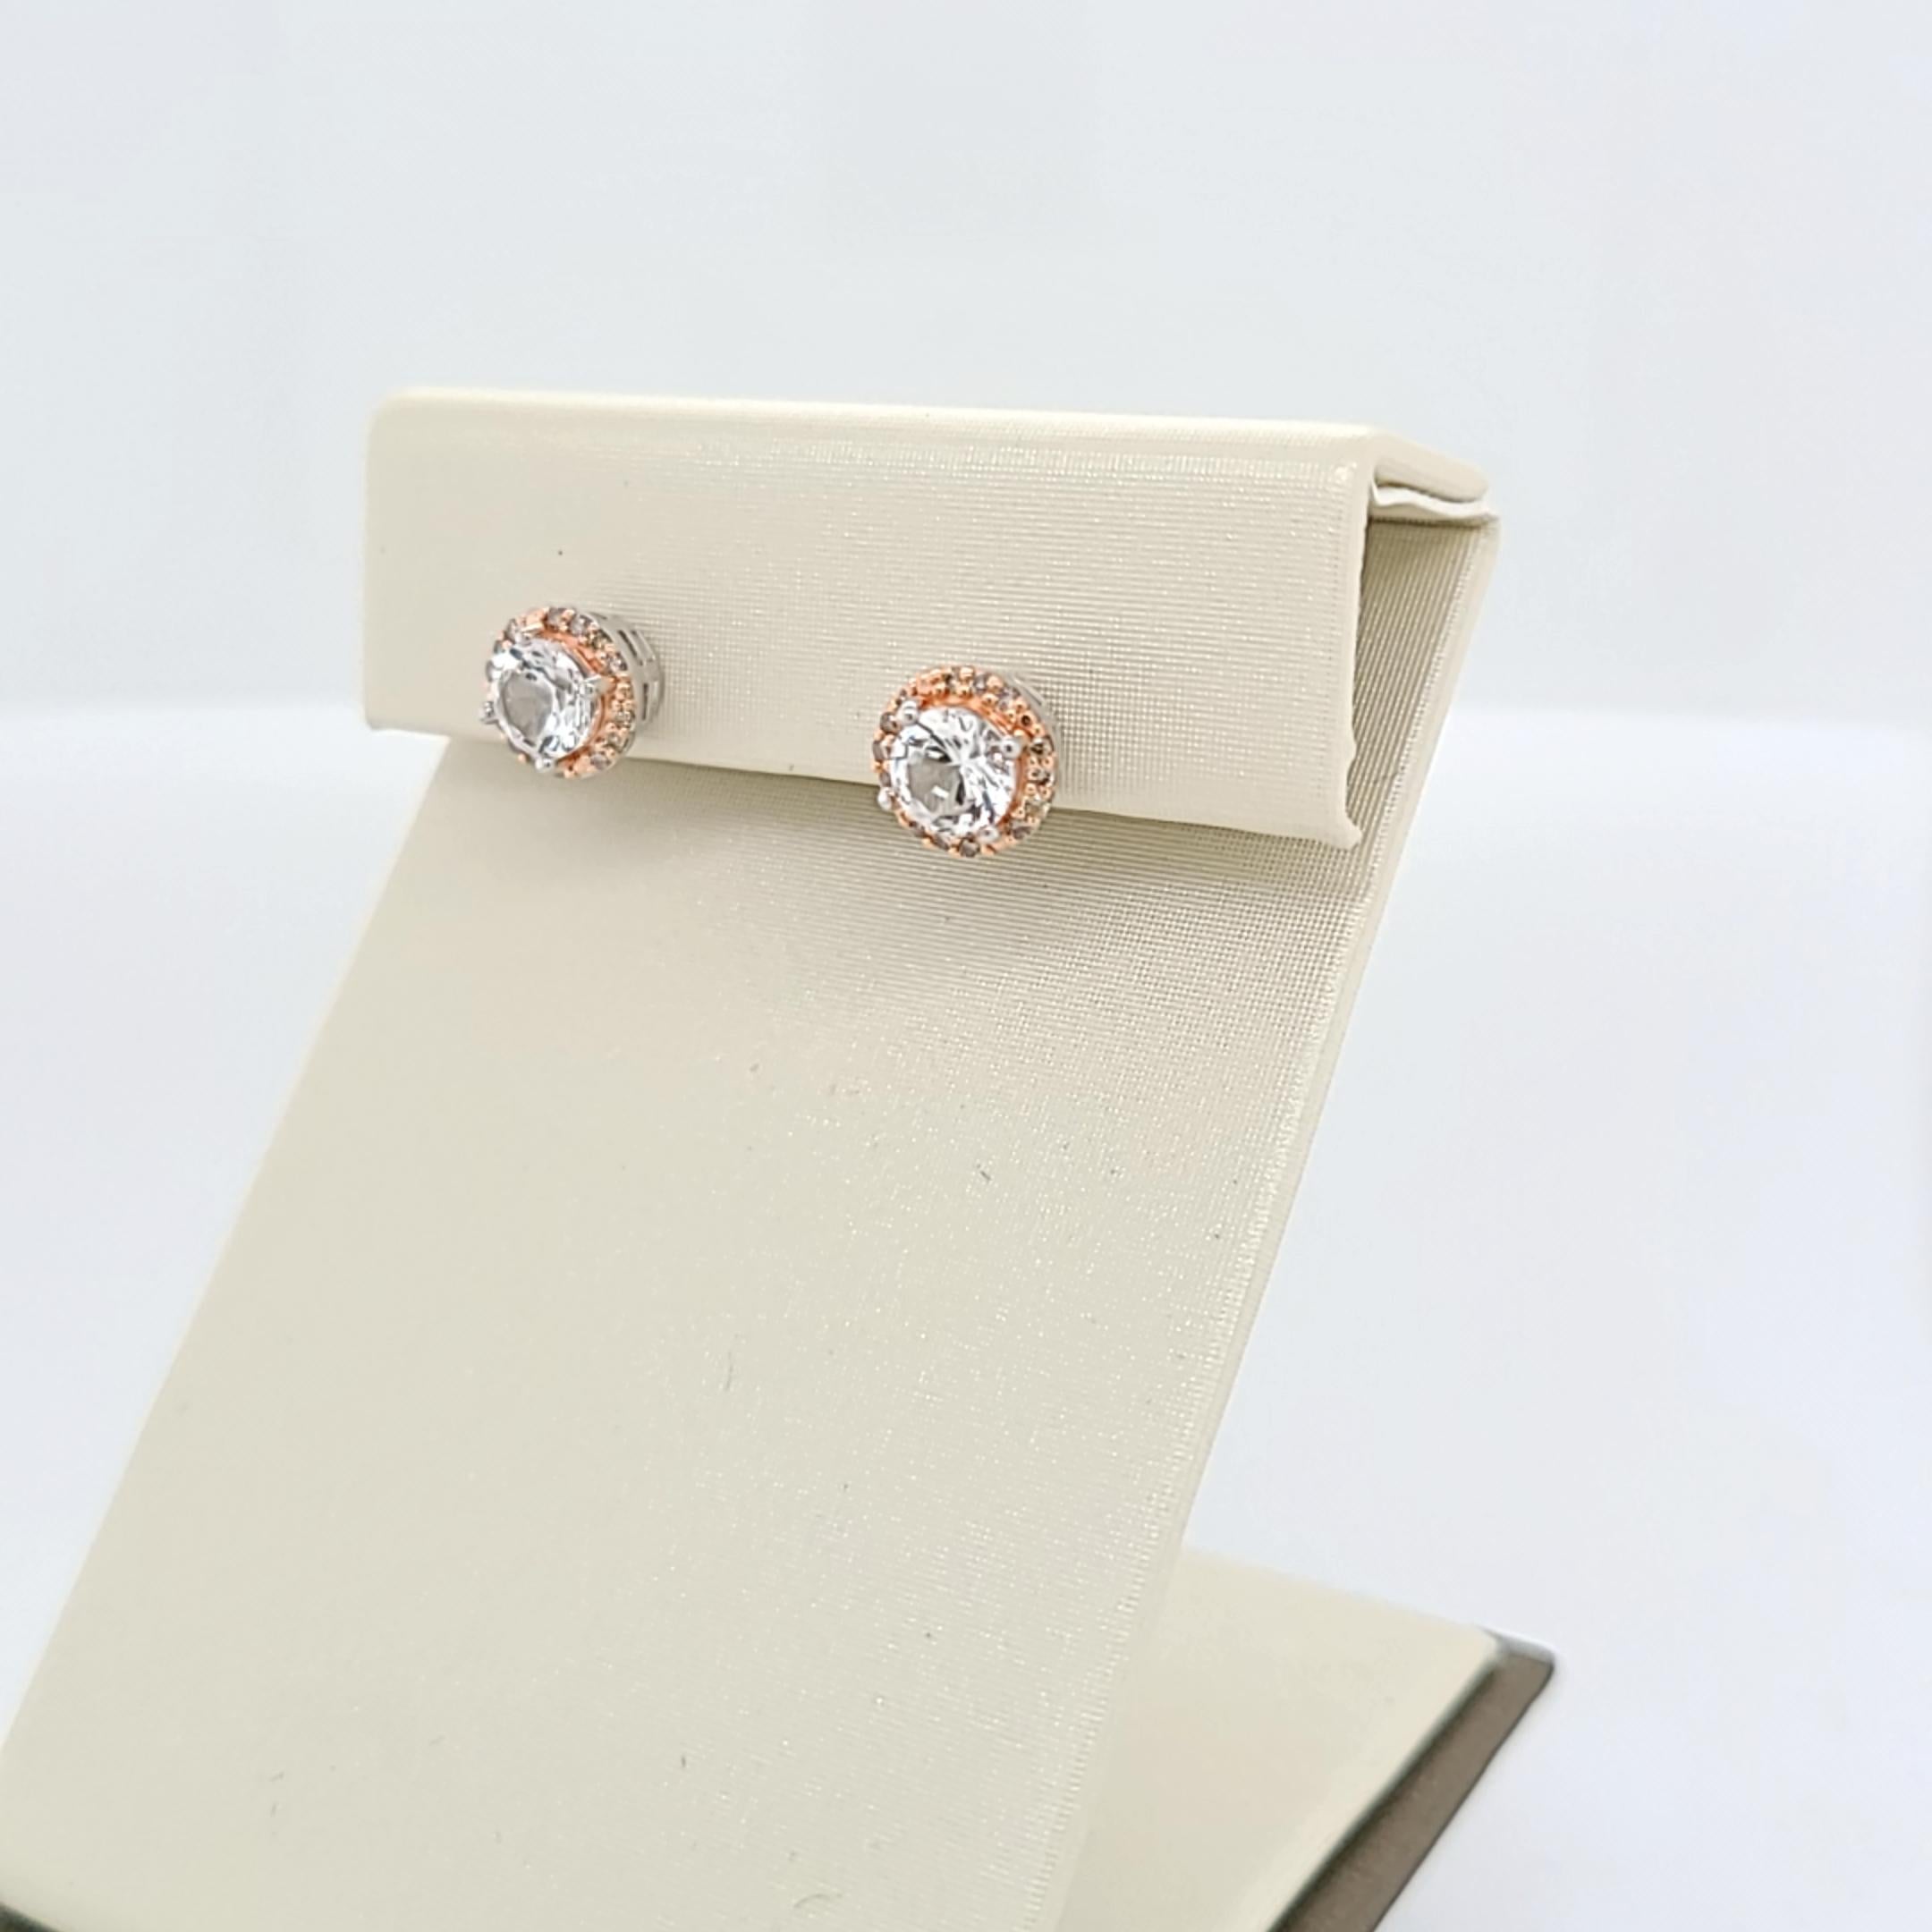 1 carat white sapphire stud earrings